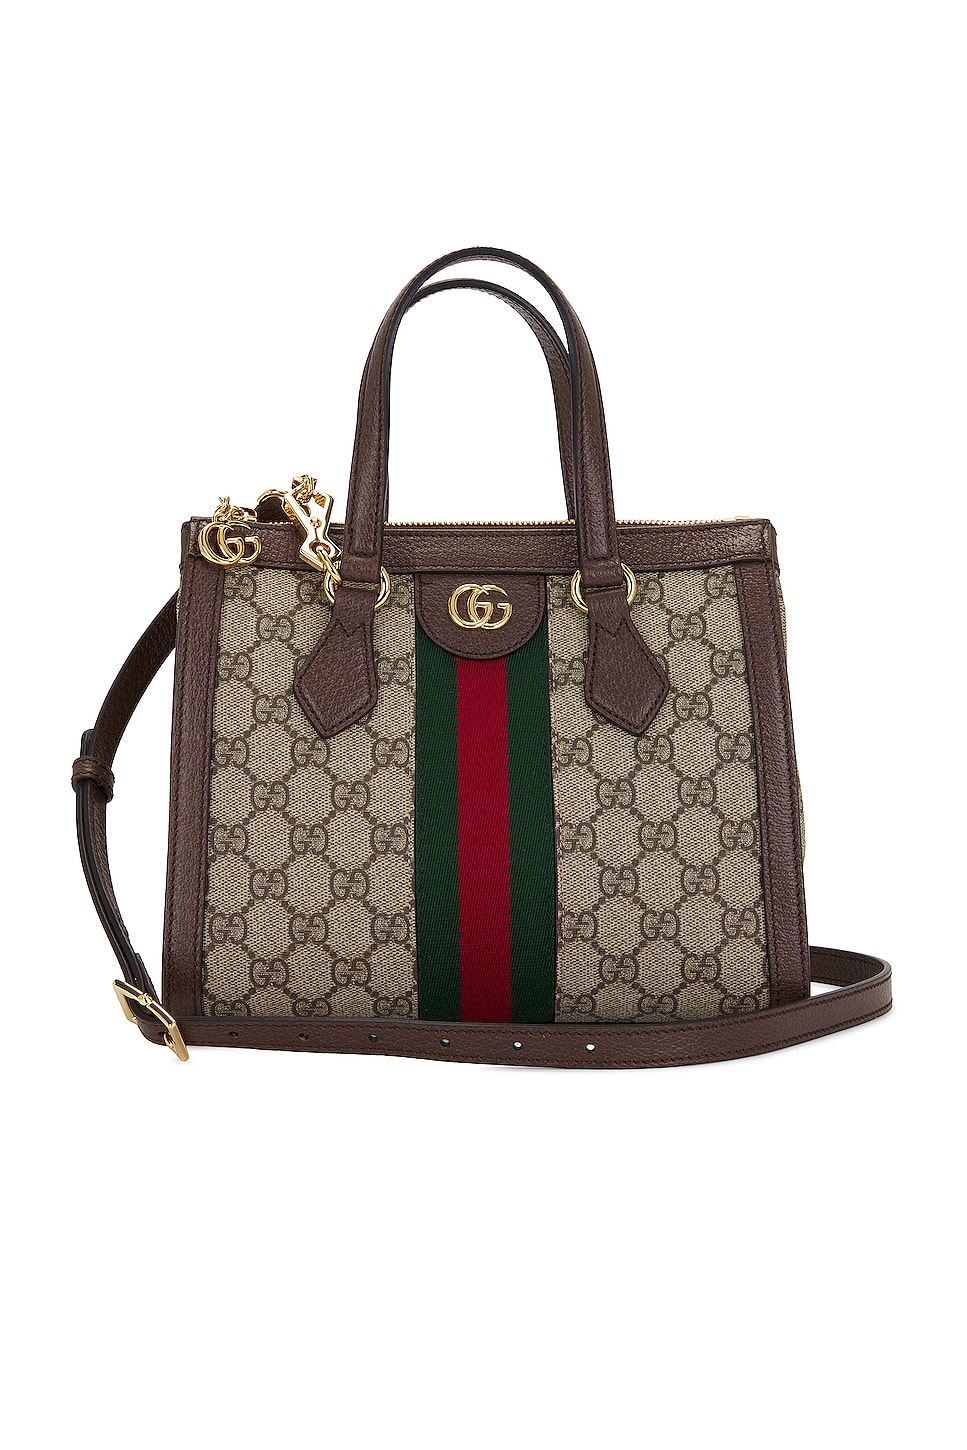 Gucci Medium Ophidia GG Tote Bag